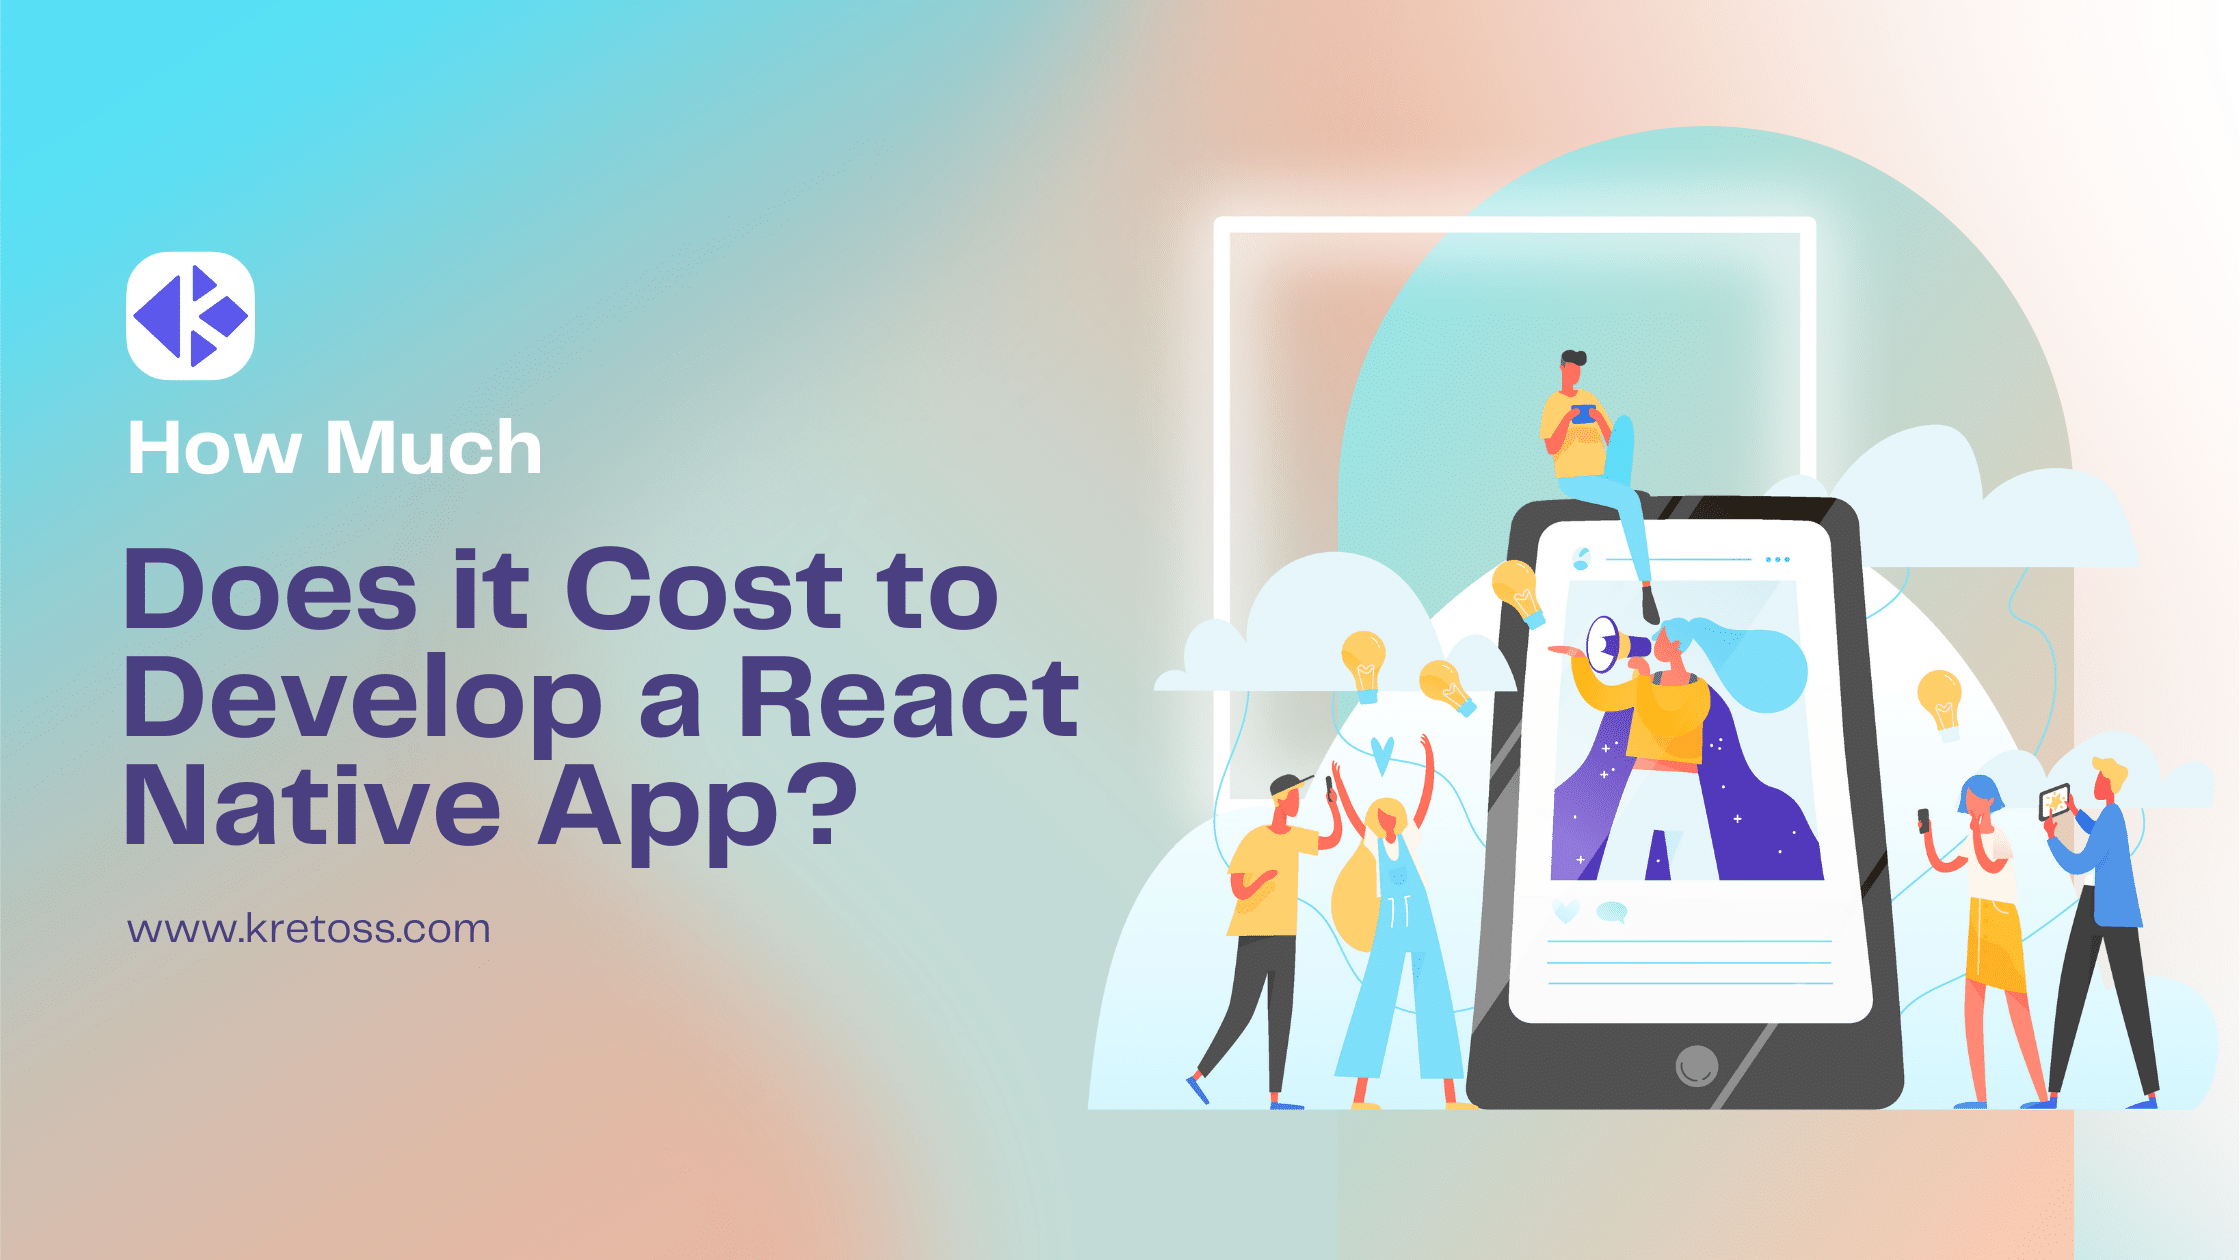 Reactnaitve mobile app development cost